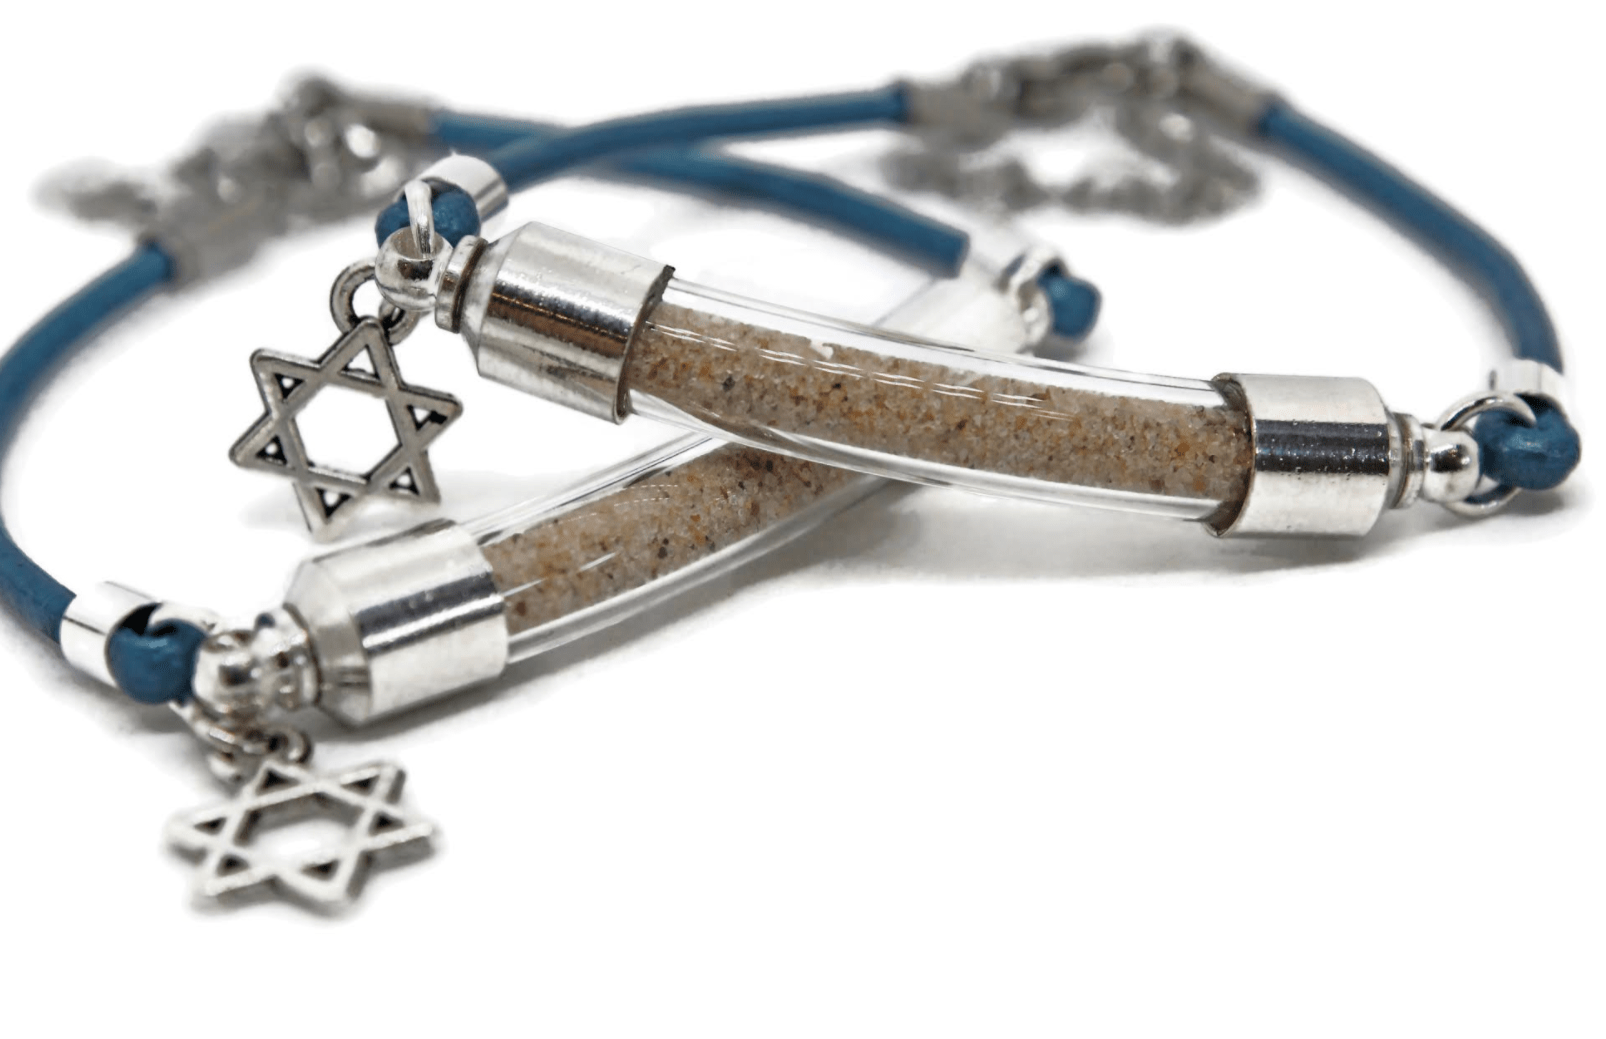 My Tribe by Sea Ranch Jewelry Bracelets Israel Sand Star of David Bracelet